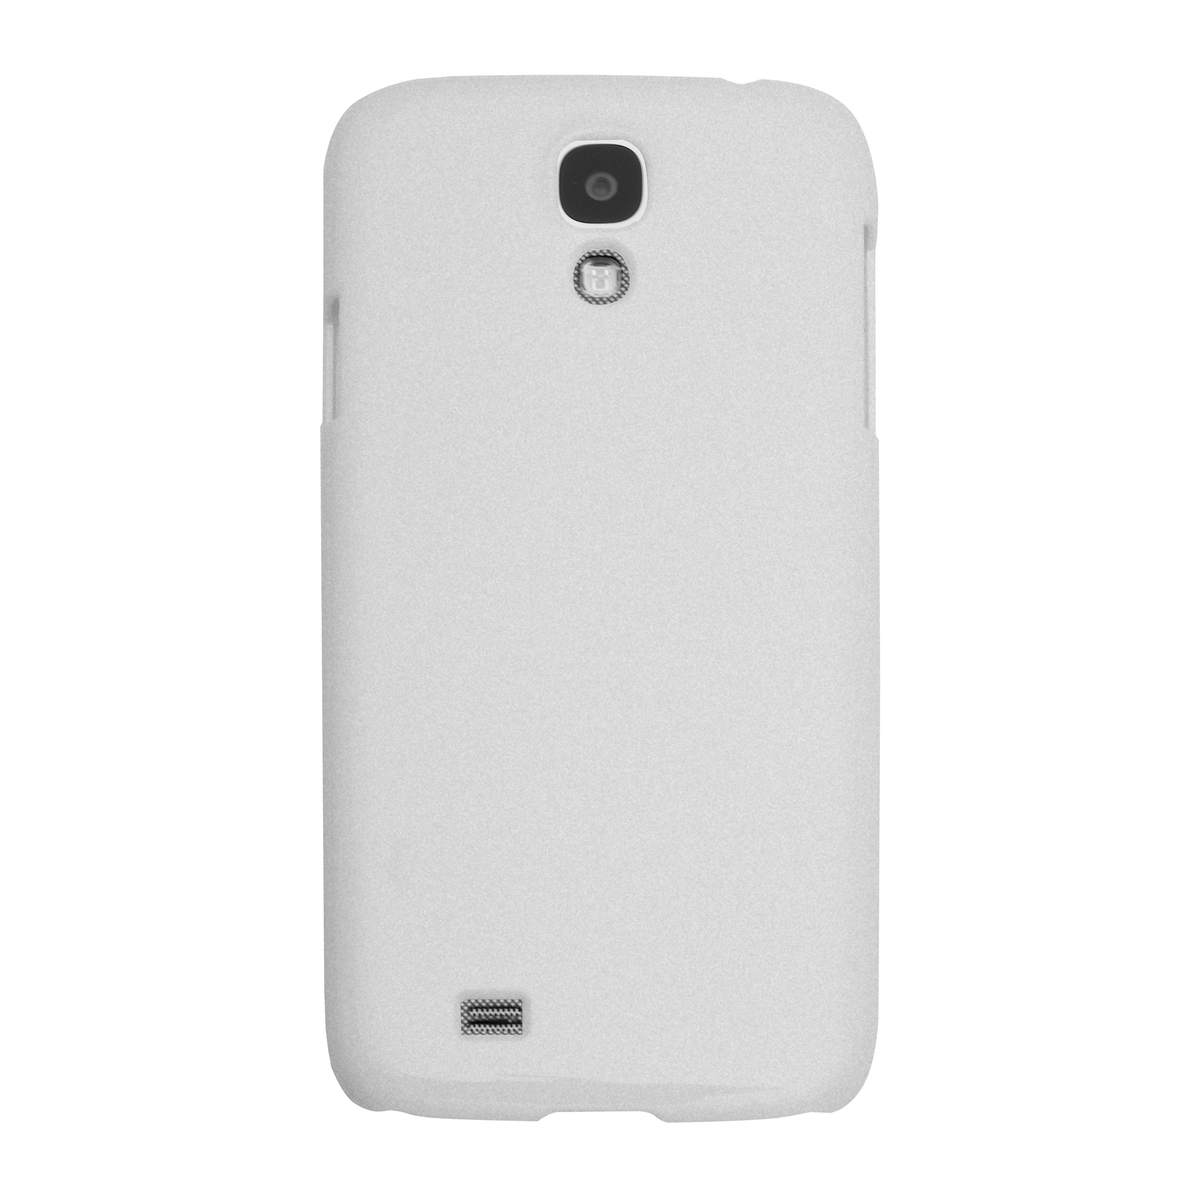 LM Smartphonecover REFLECTS-COVER VII Rubber für Galaxy S4 WHITE weiß